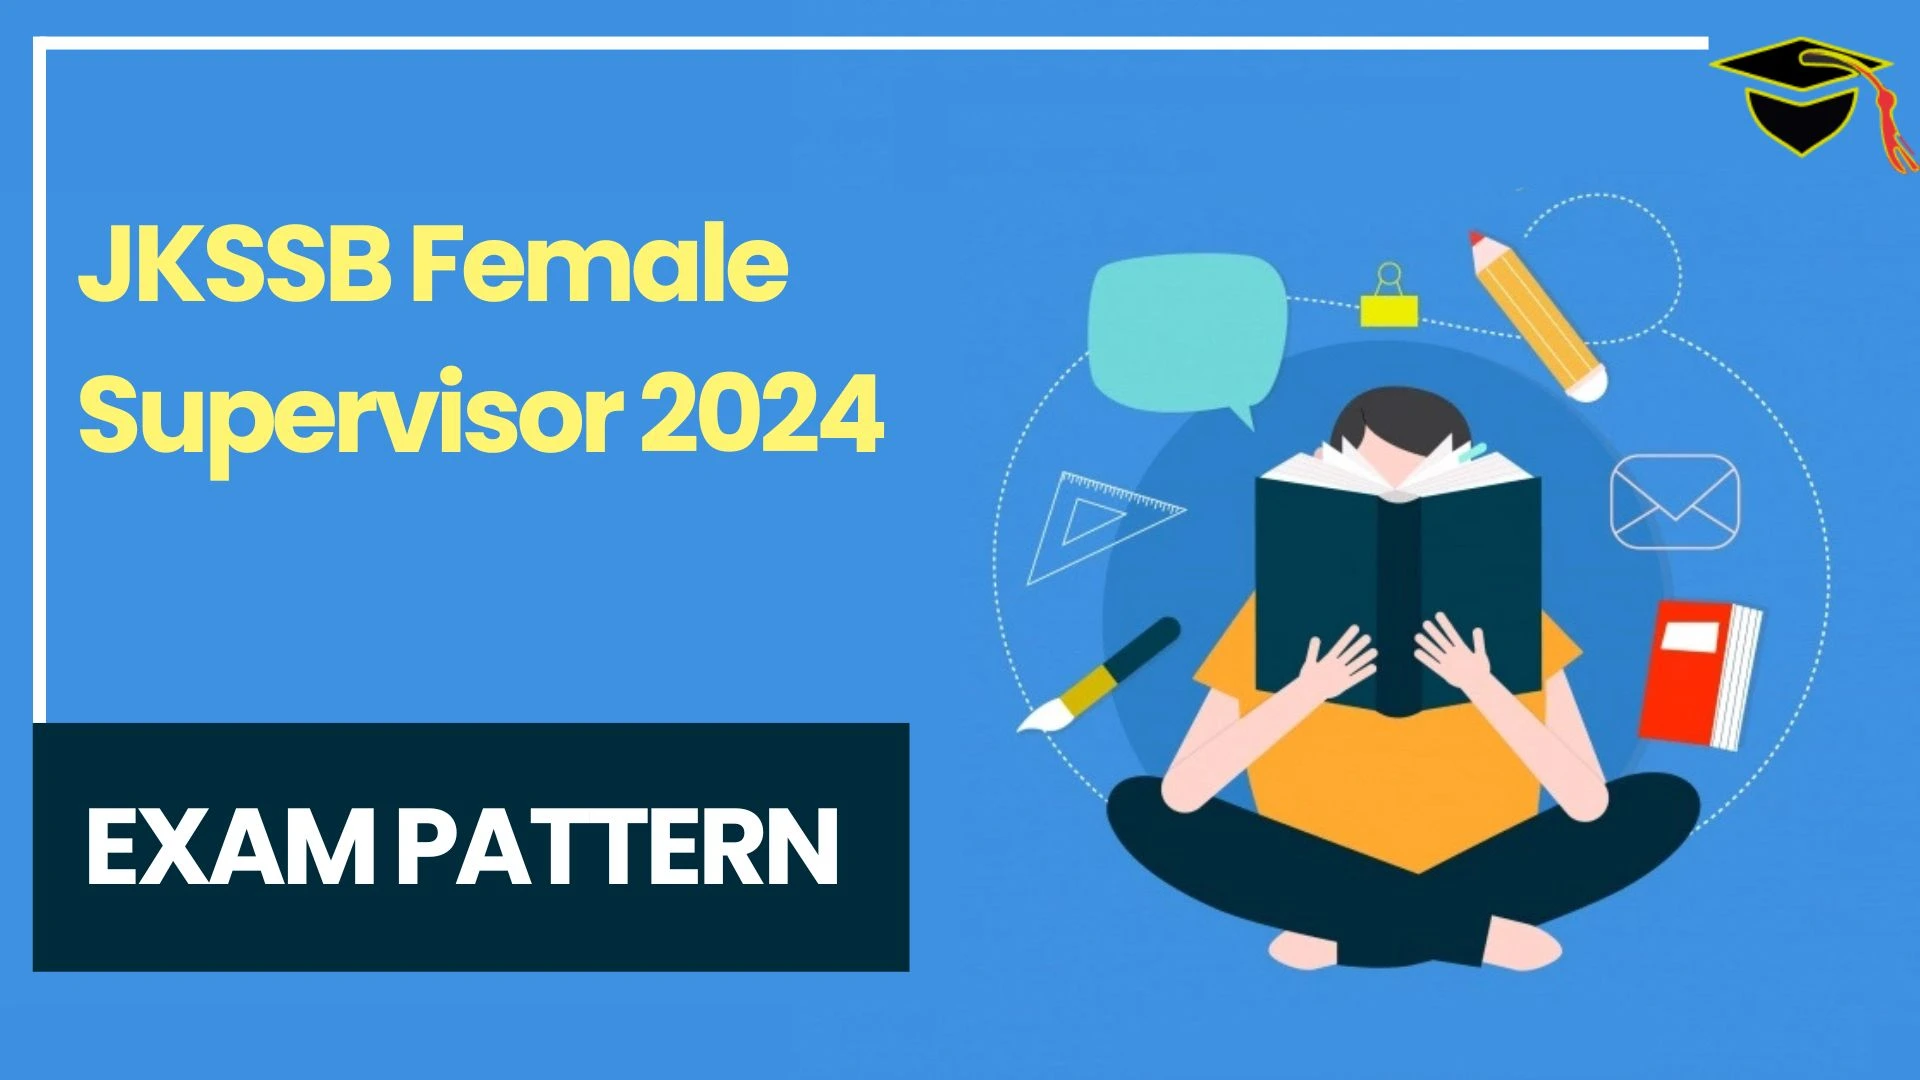 JKSSB Female Supervisor Exam Pattern 2024 Scheme of Examination